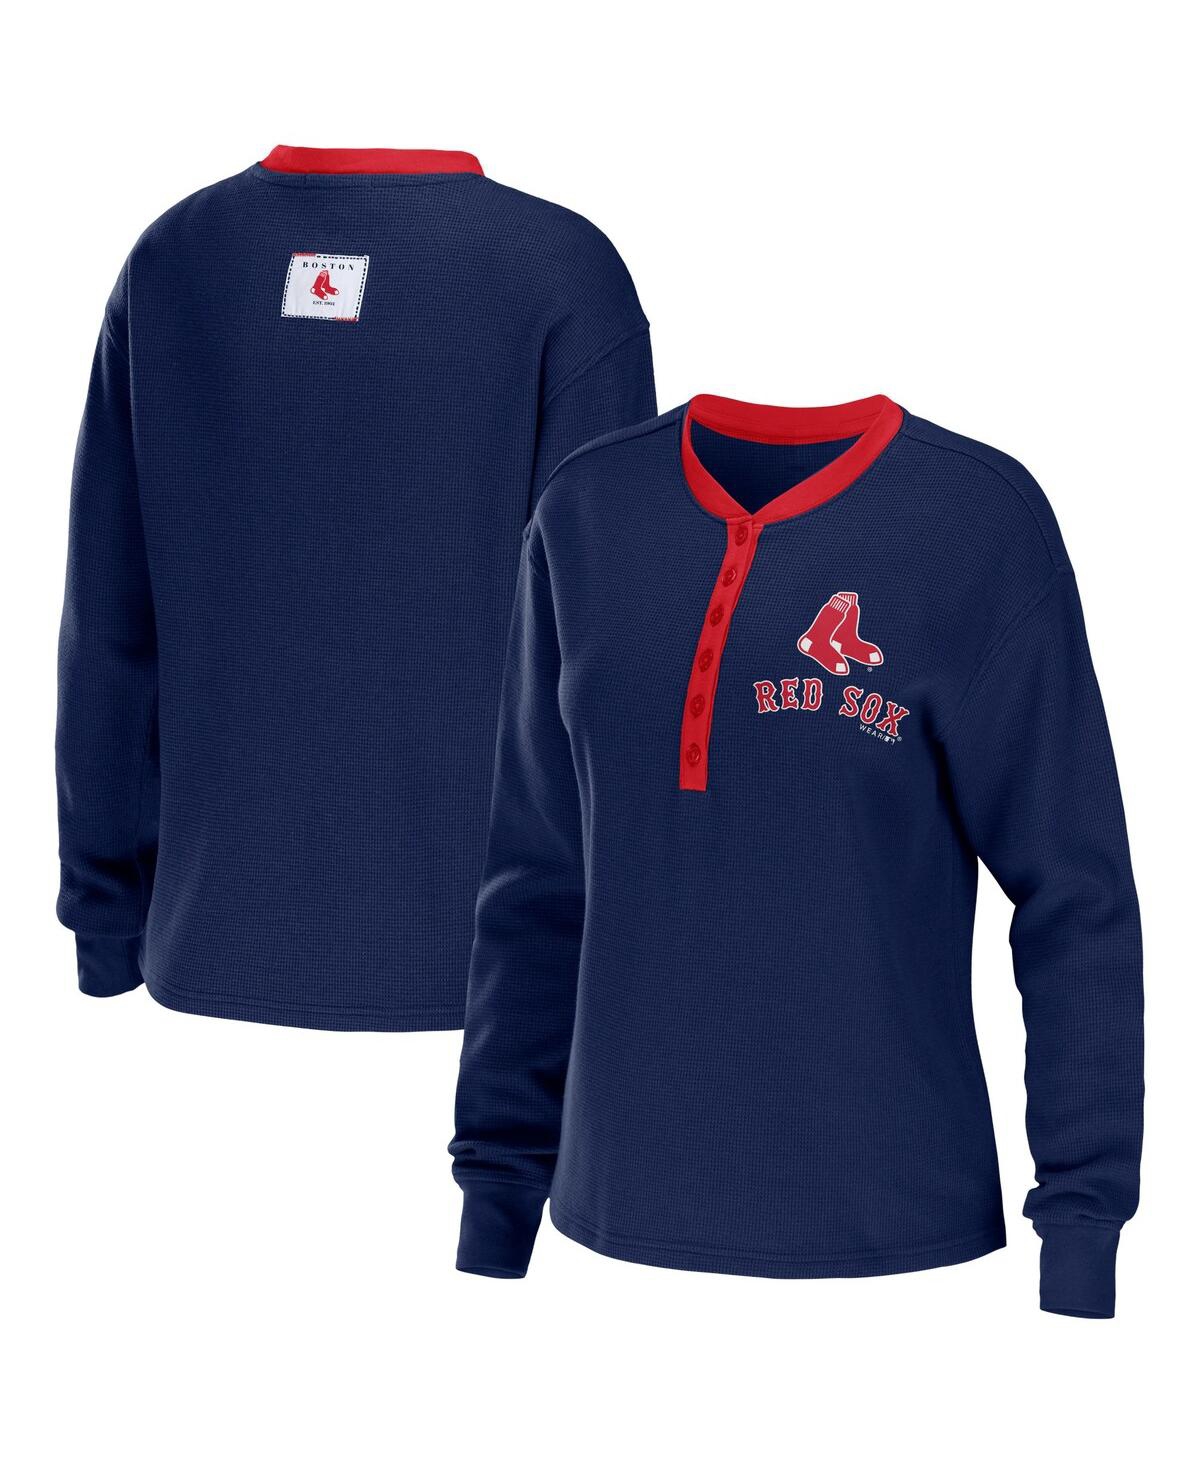 Shop Wear By Erin Andrews Women's  Navy Boston Red Sox Waffle Henley Long Sleeve T-shirt